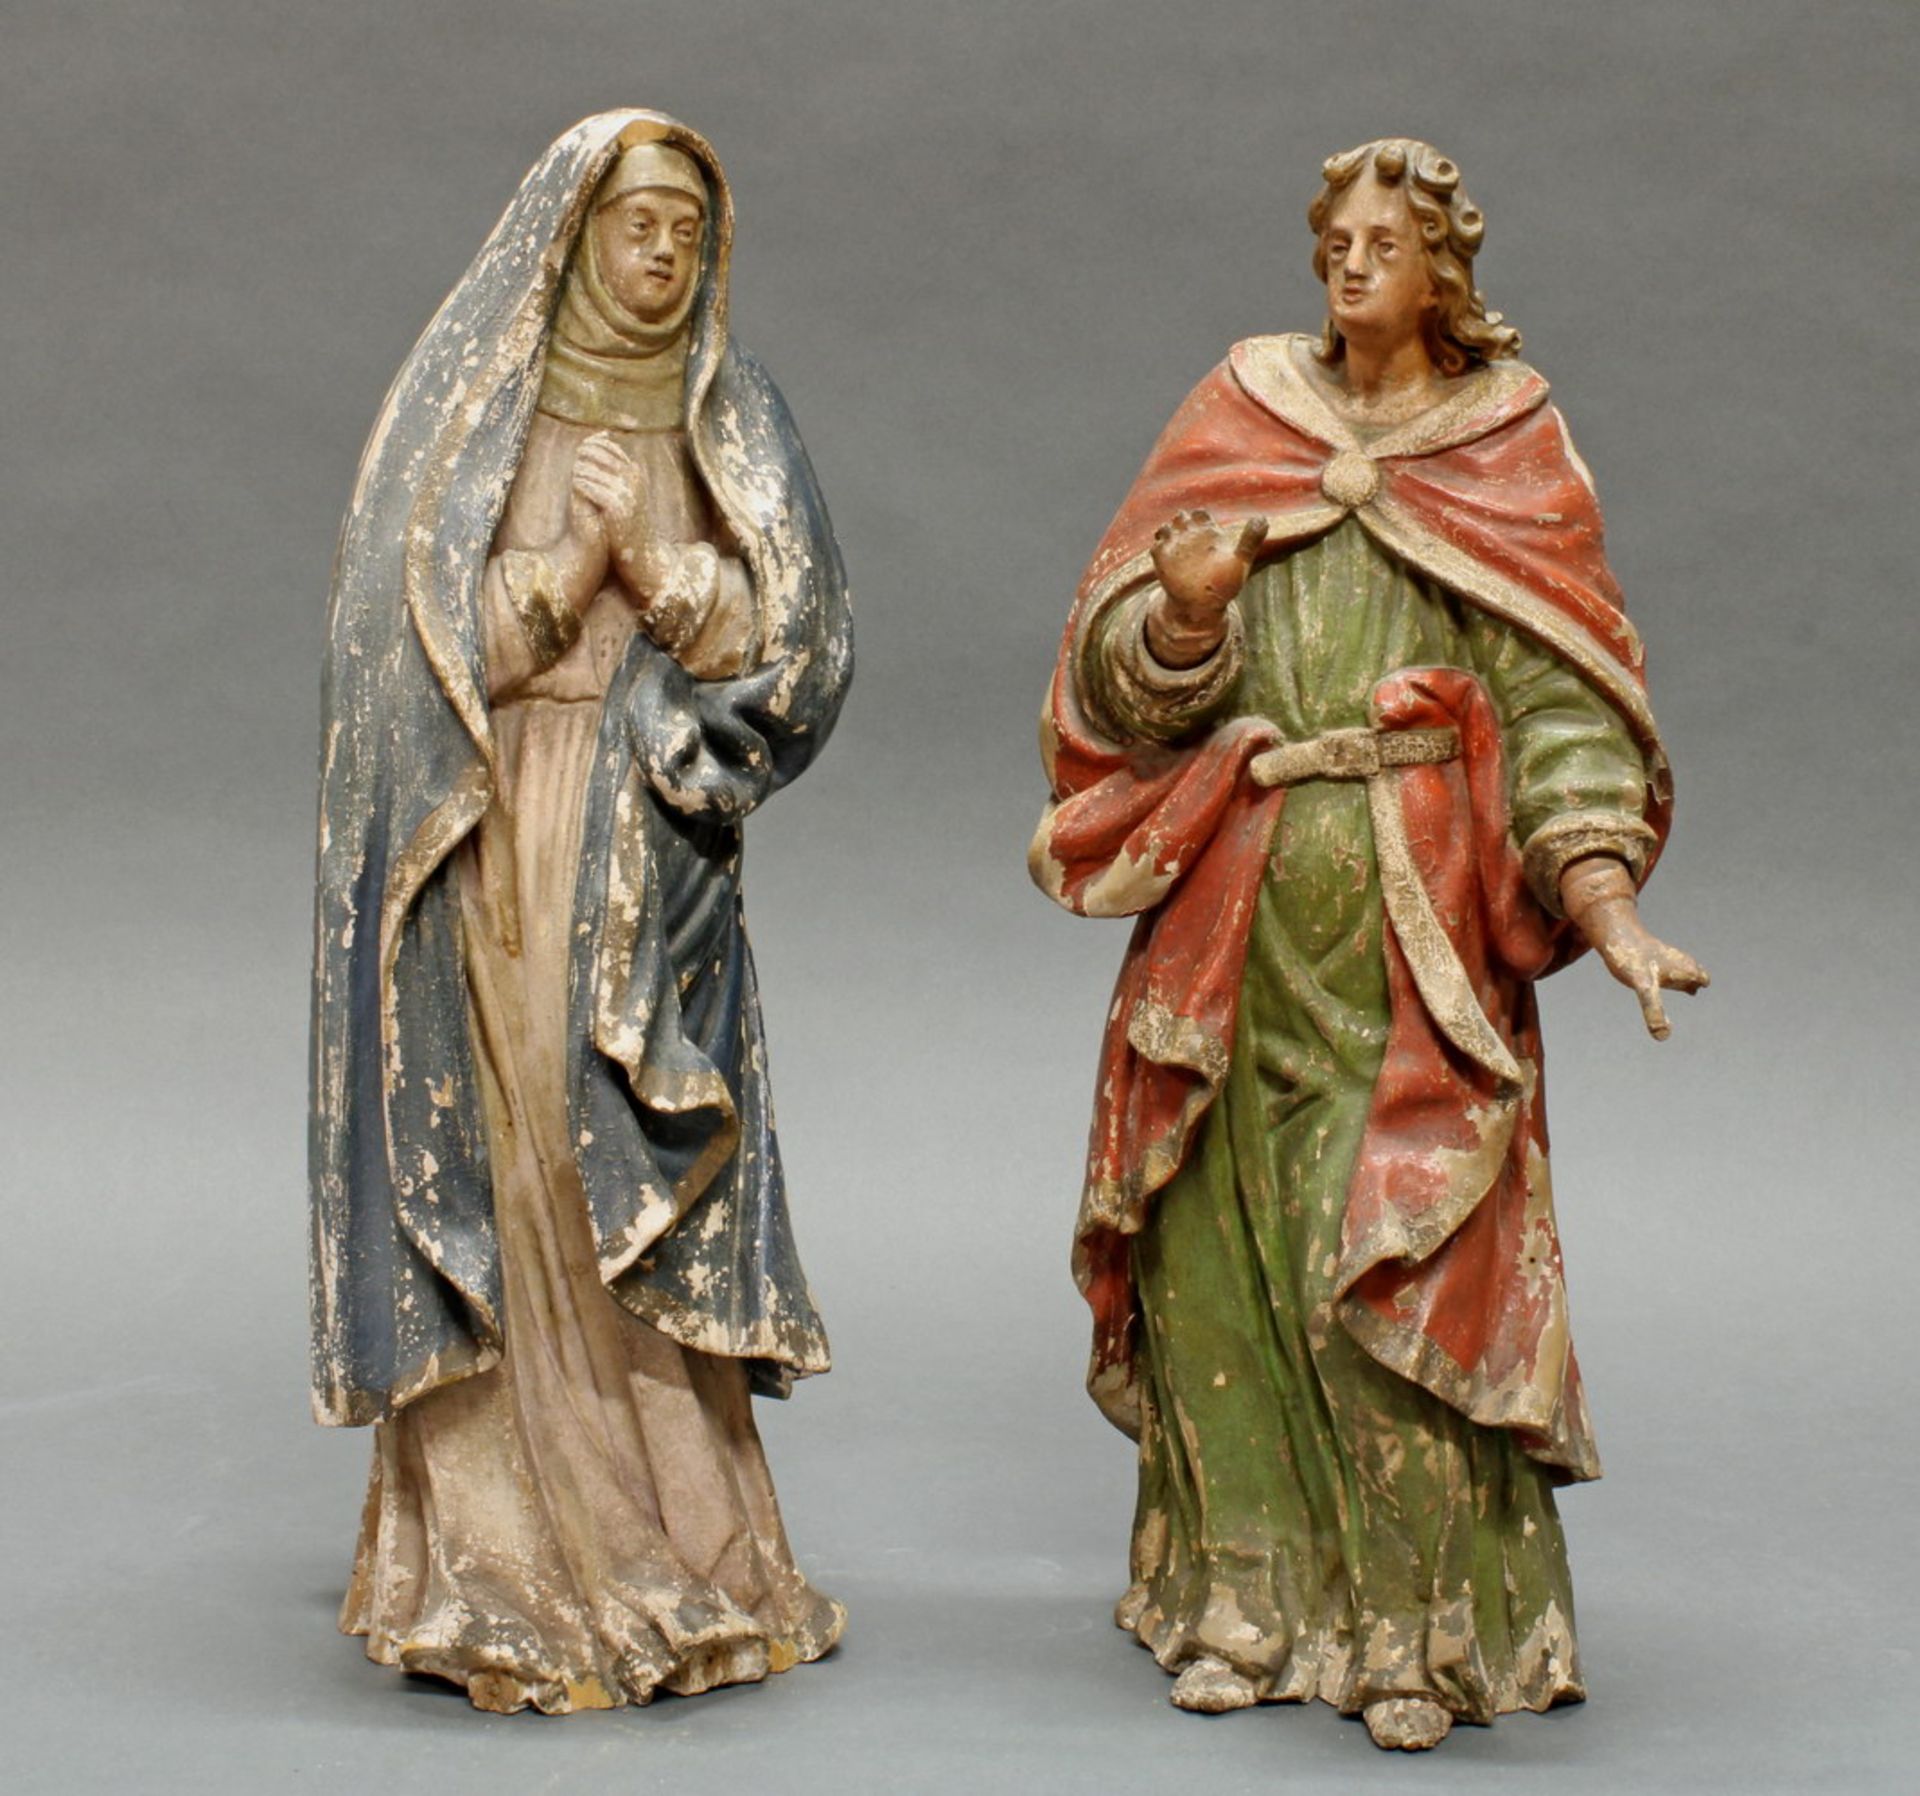 2 Skulpturen, Holz geschnitzt, "Muttergottes", "Hl. Johannes", aus einer Kreuzigungsgruppe, 17. Jh.,